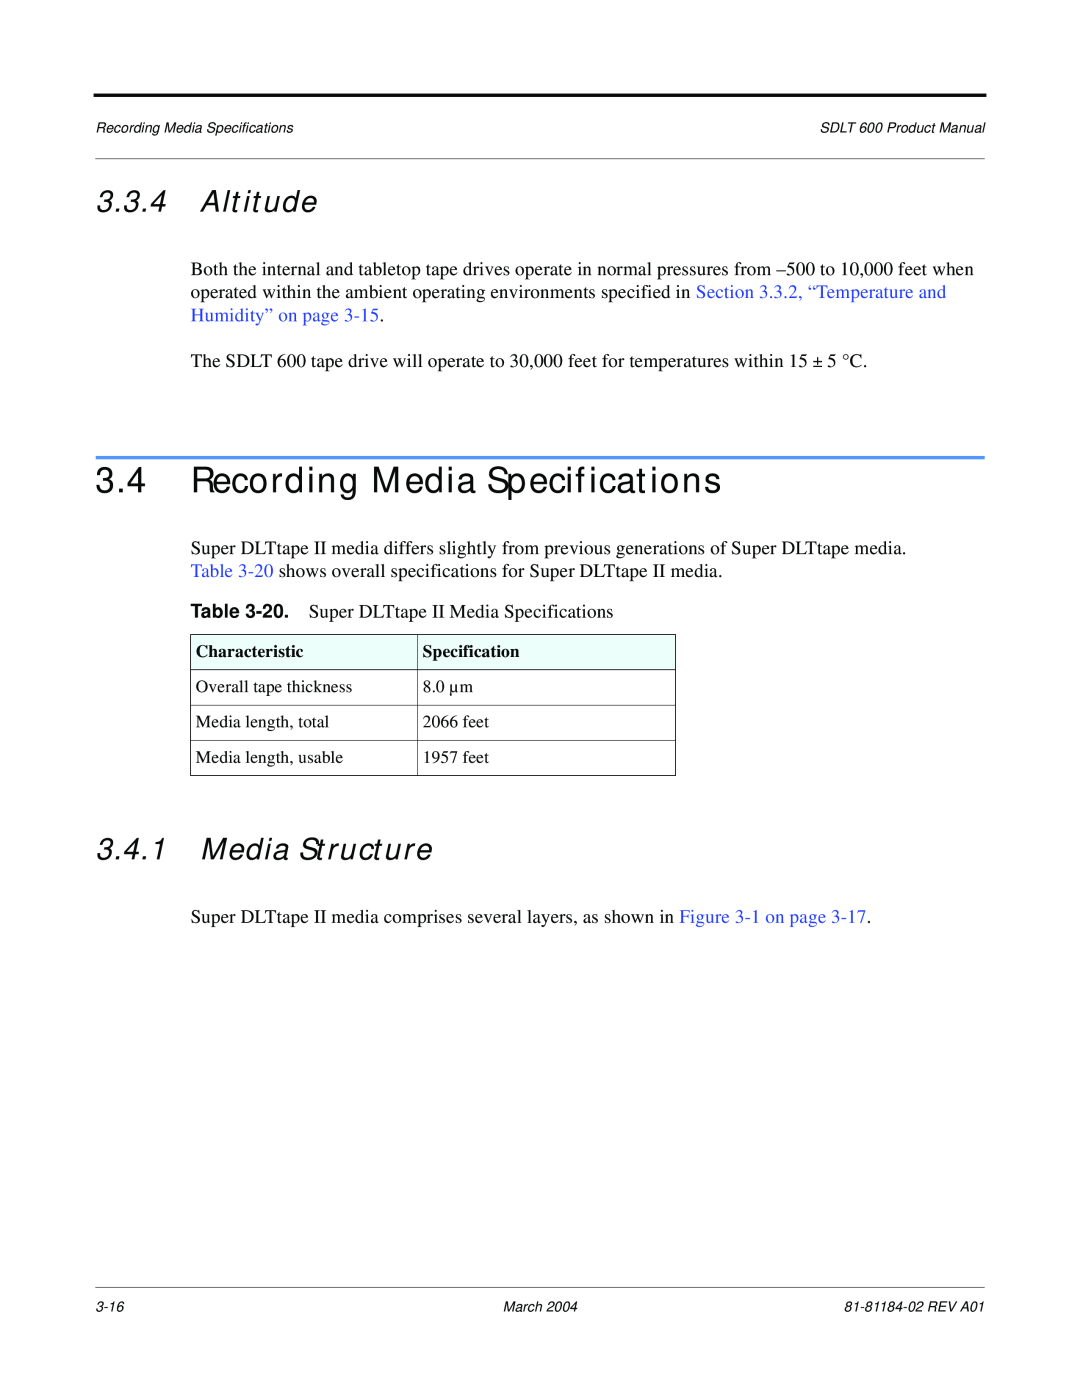 Tandberg Data 600 manual Recording Media Specifications, Altitude, Media Structure 